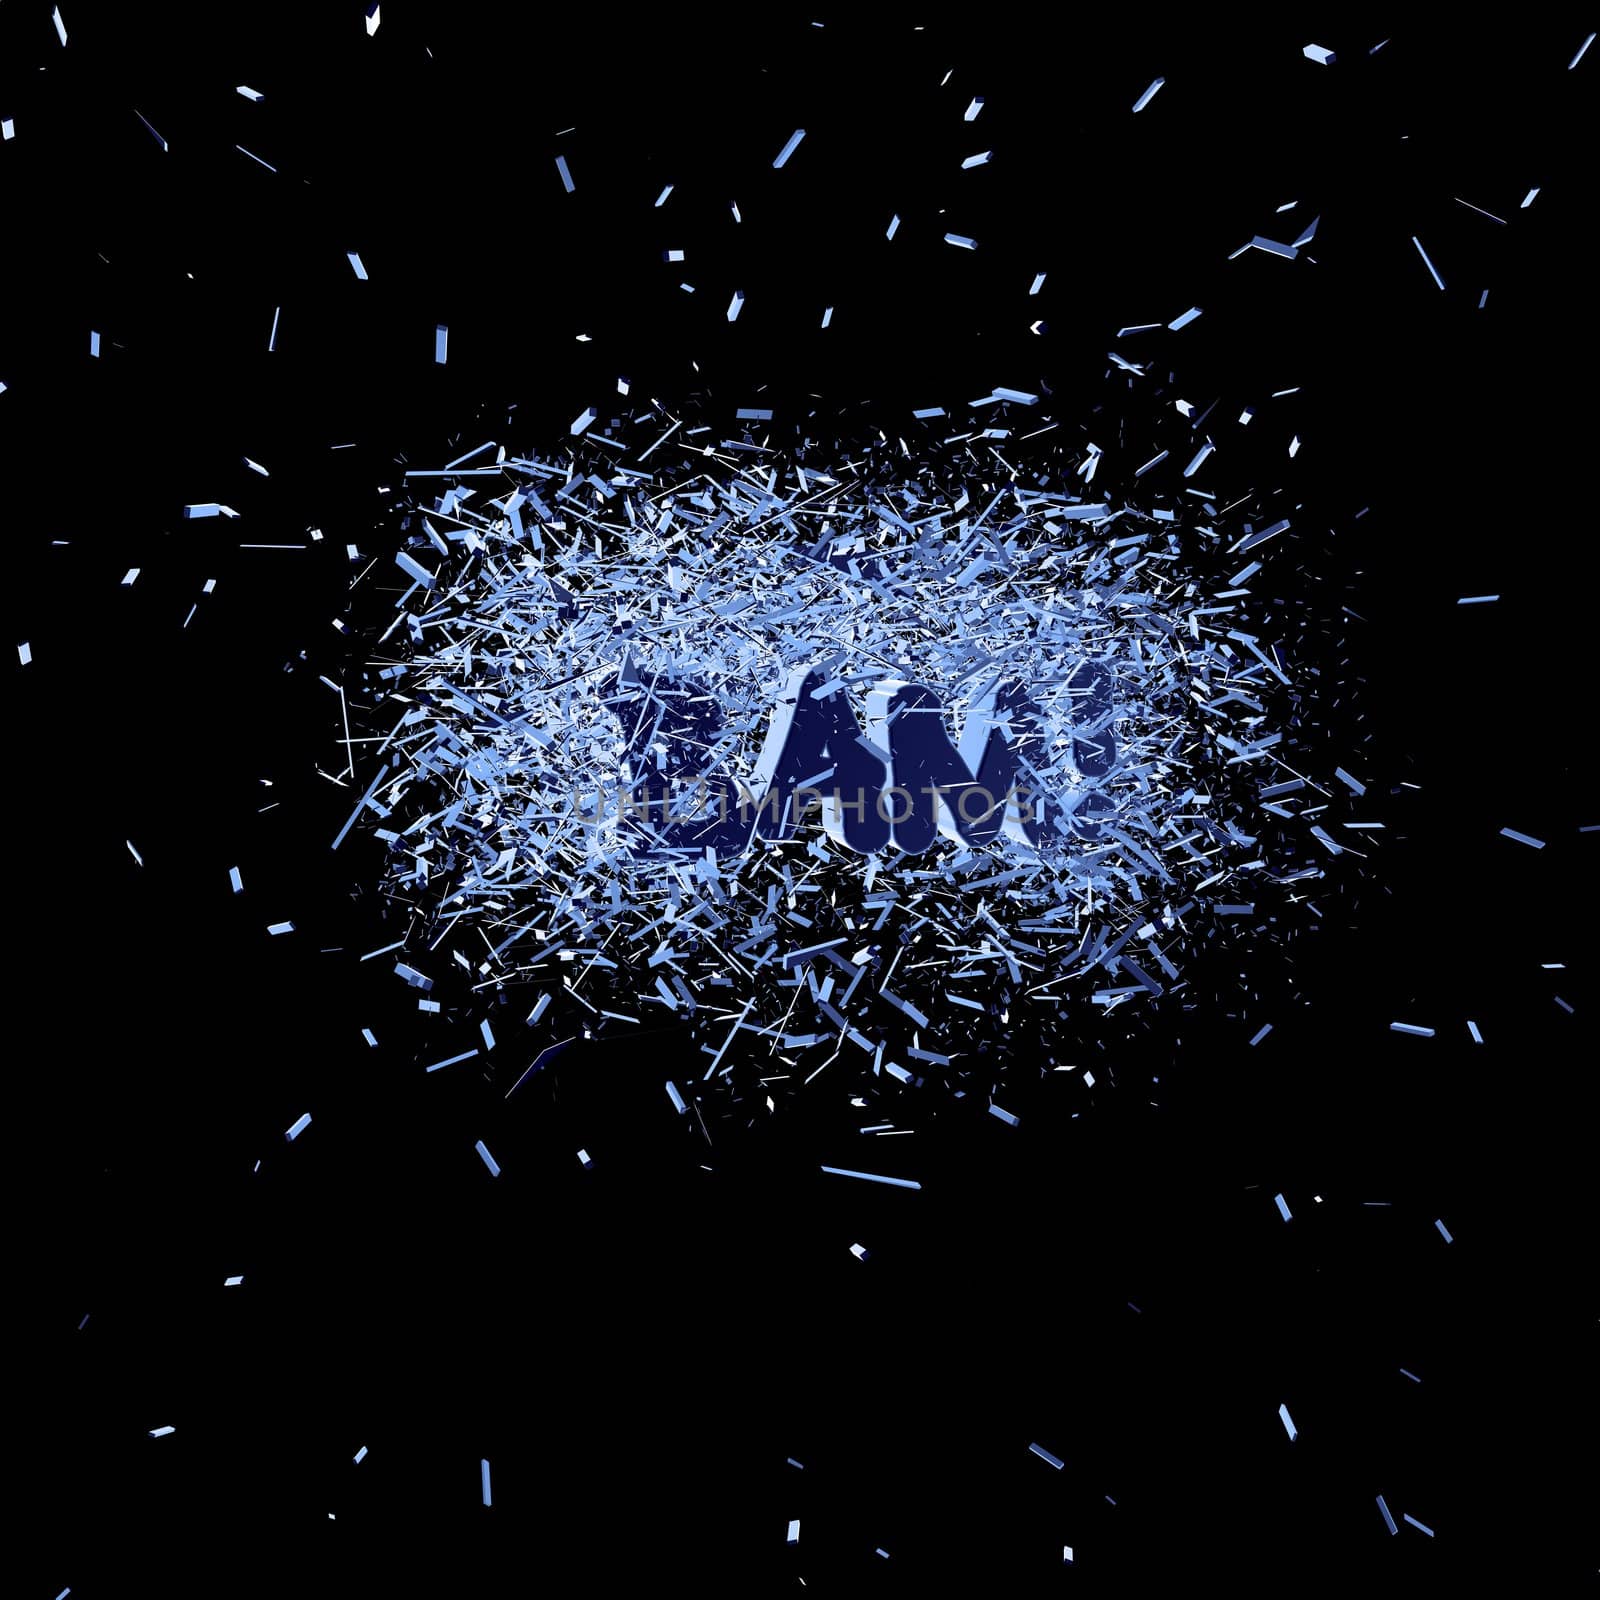 exploding word bam! on black background - 3d illustration